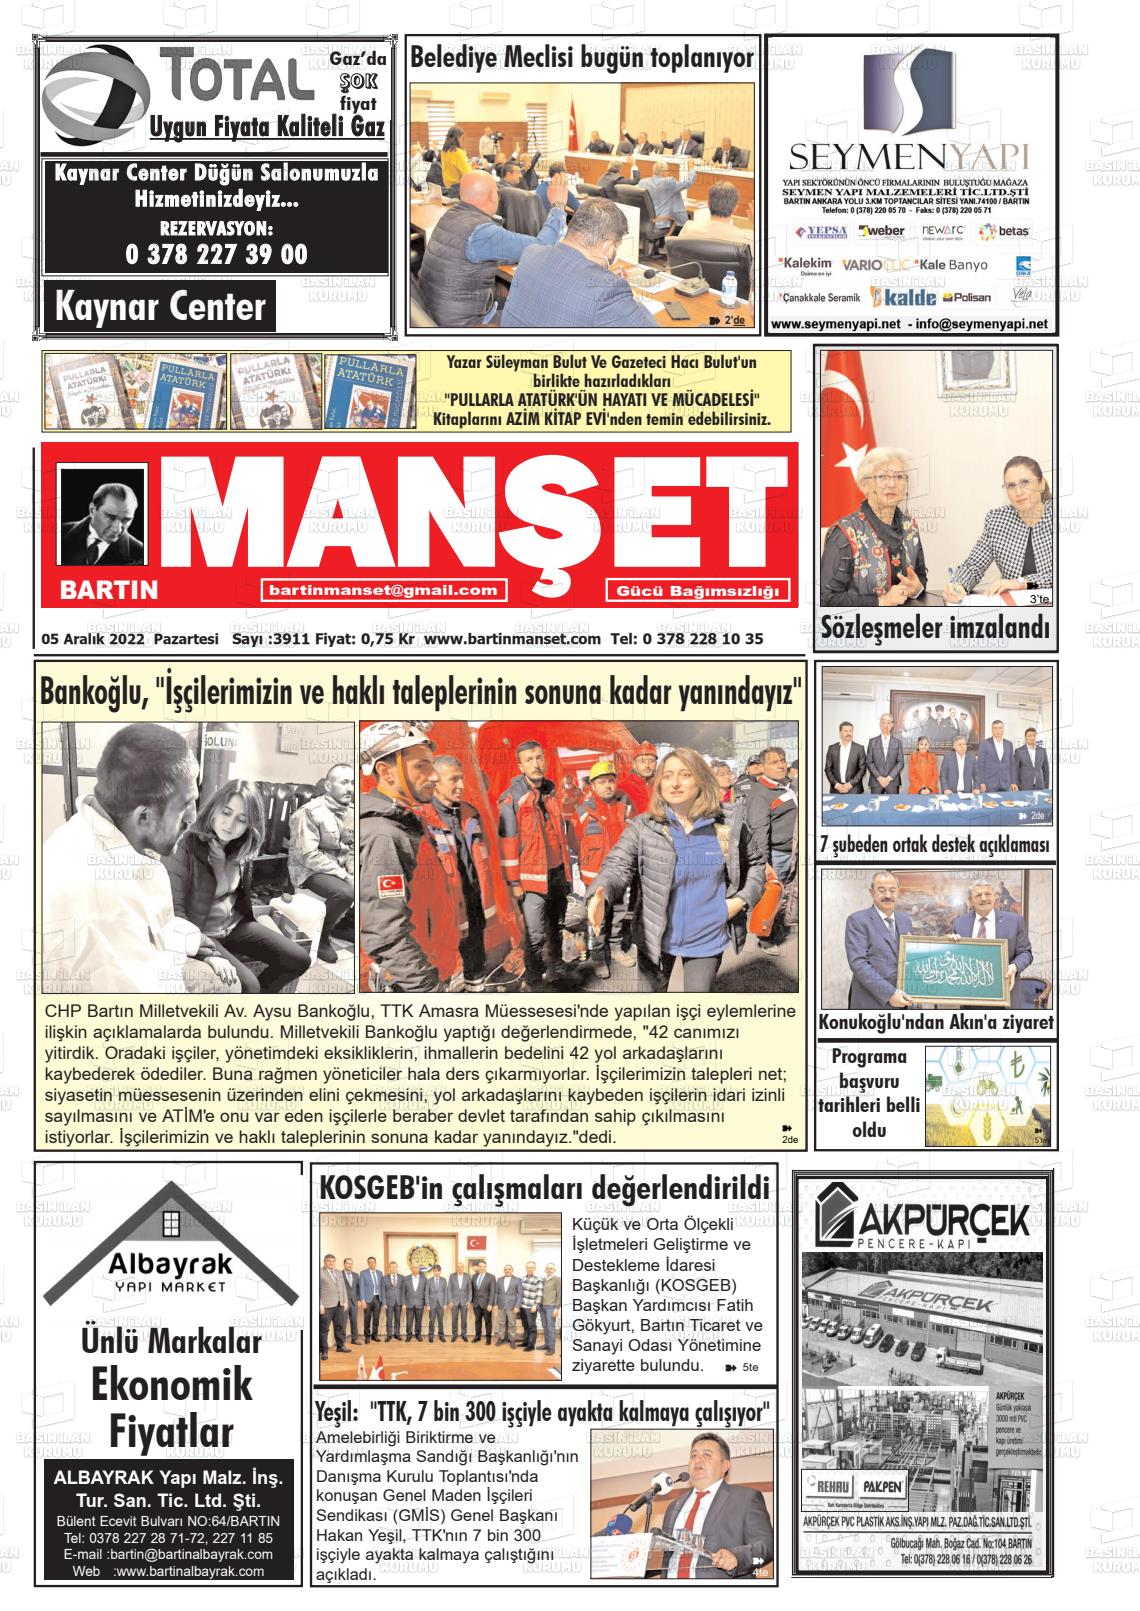 05 Aralık 2022 Bartın Manşet Gazete Manşeti